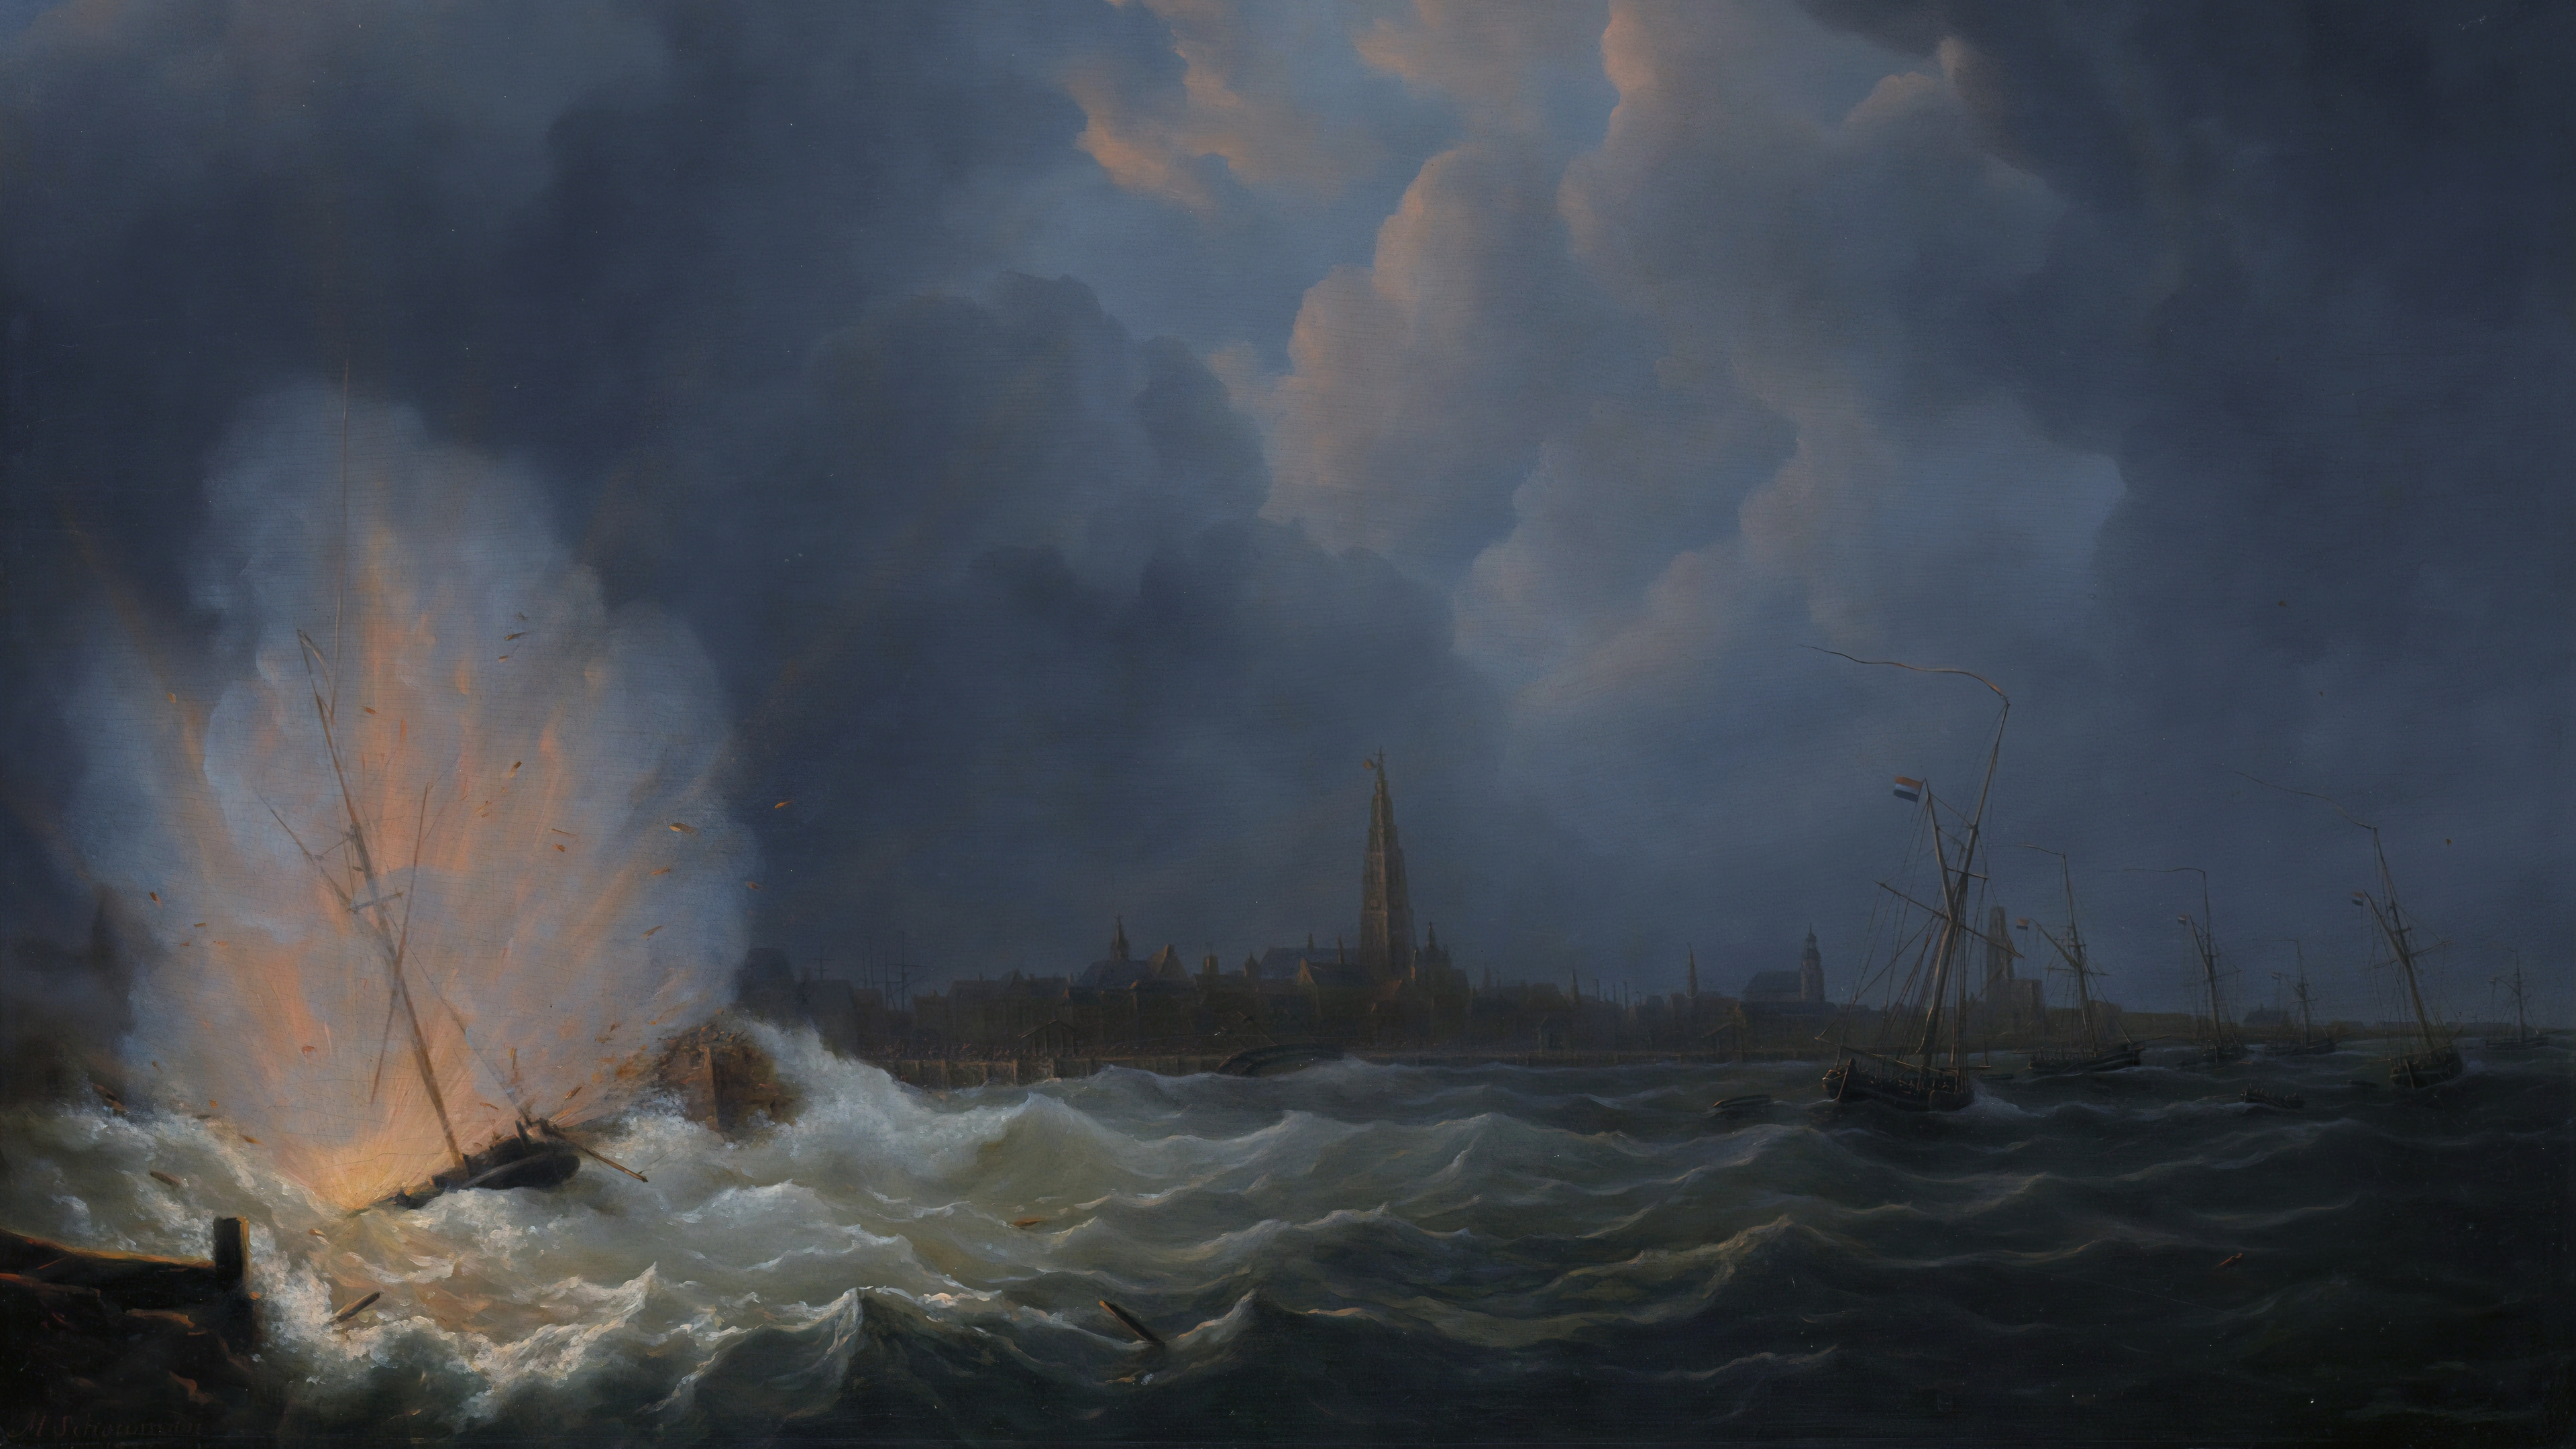 Clouds Overcast Explosion Ship Maritime Ocean Battle Painting Sailing Ship Martinus Schouman Antwerp 3840x2160